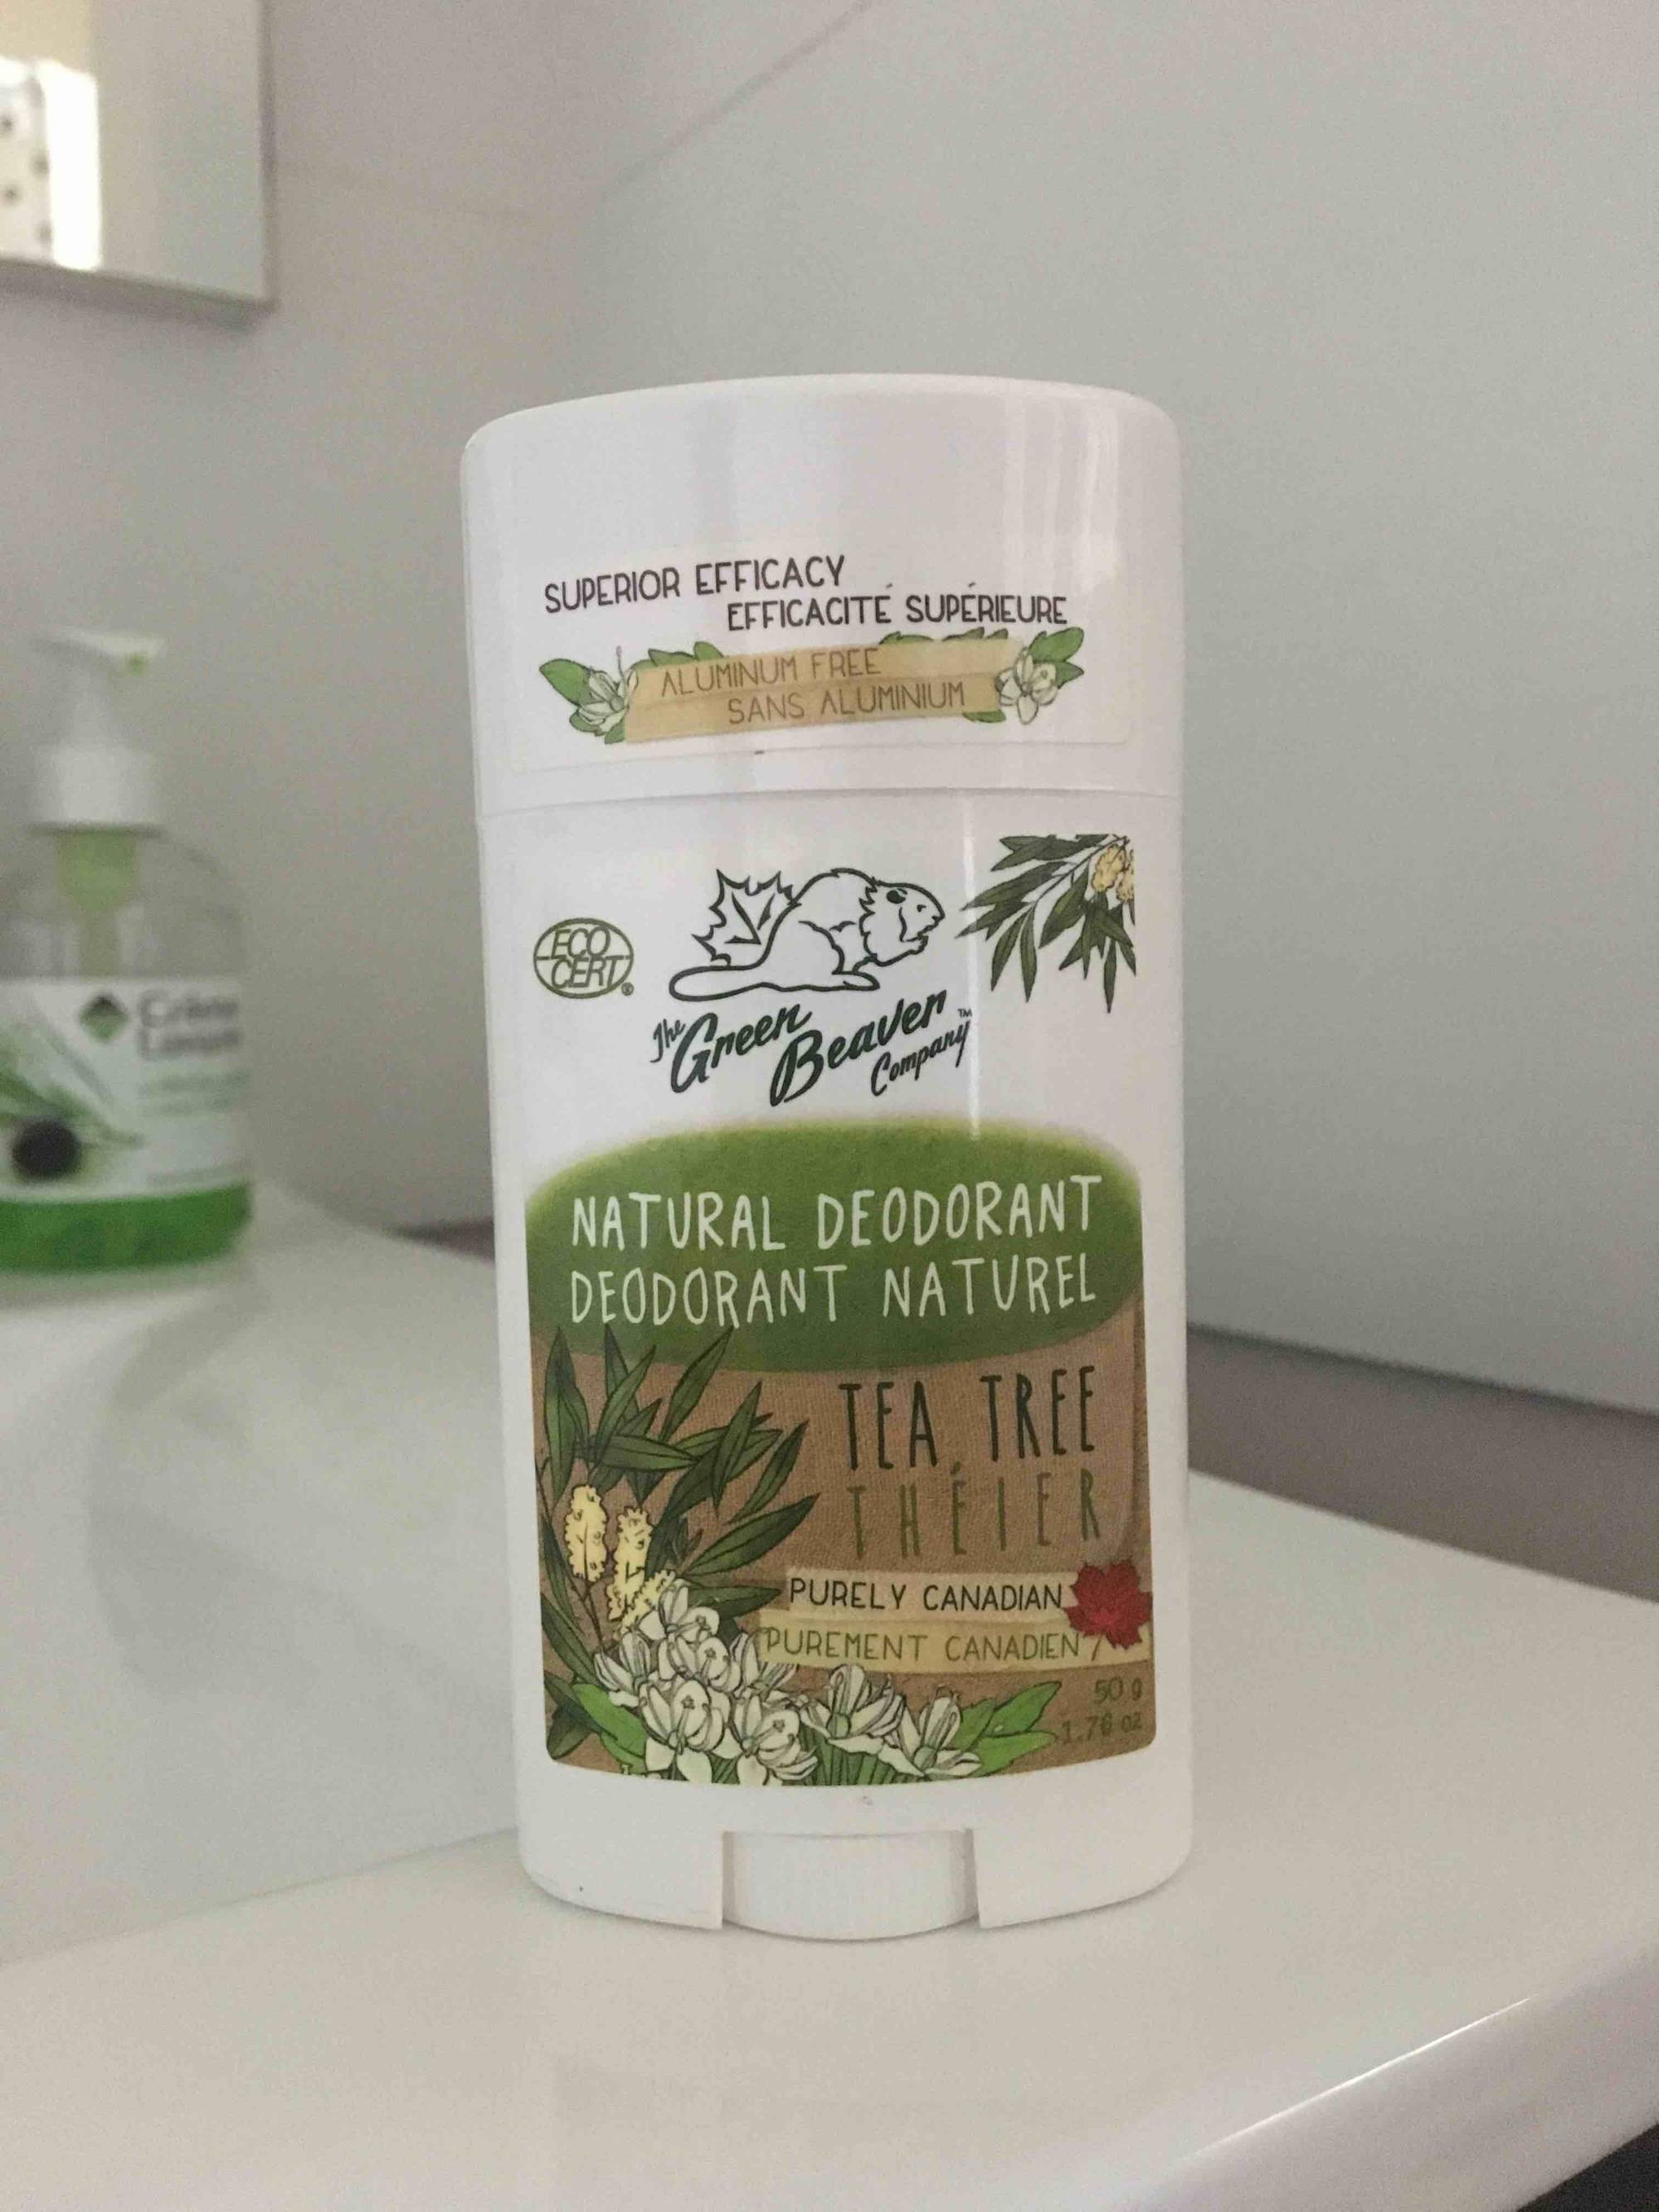 THE GREEN BEAVER COMPANY - Théier - Déodorant naturel